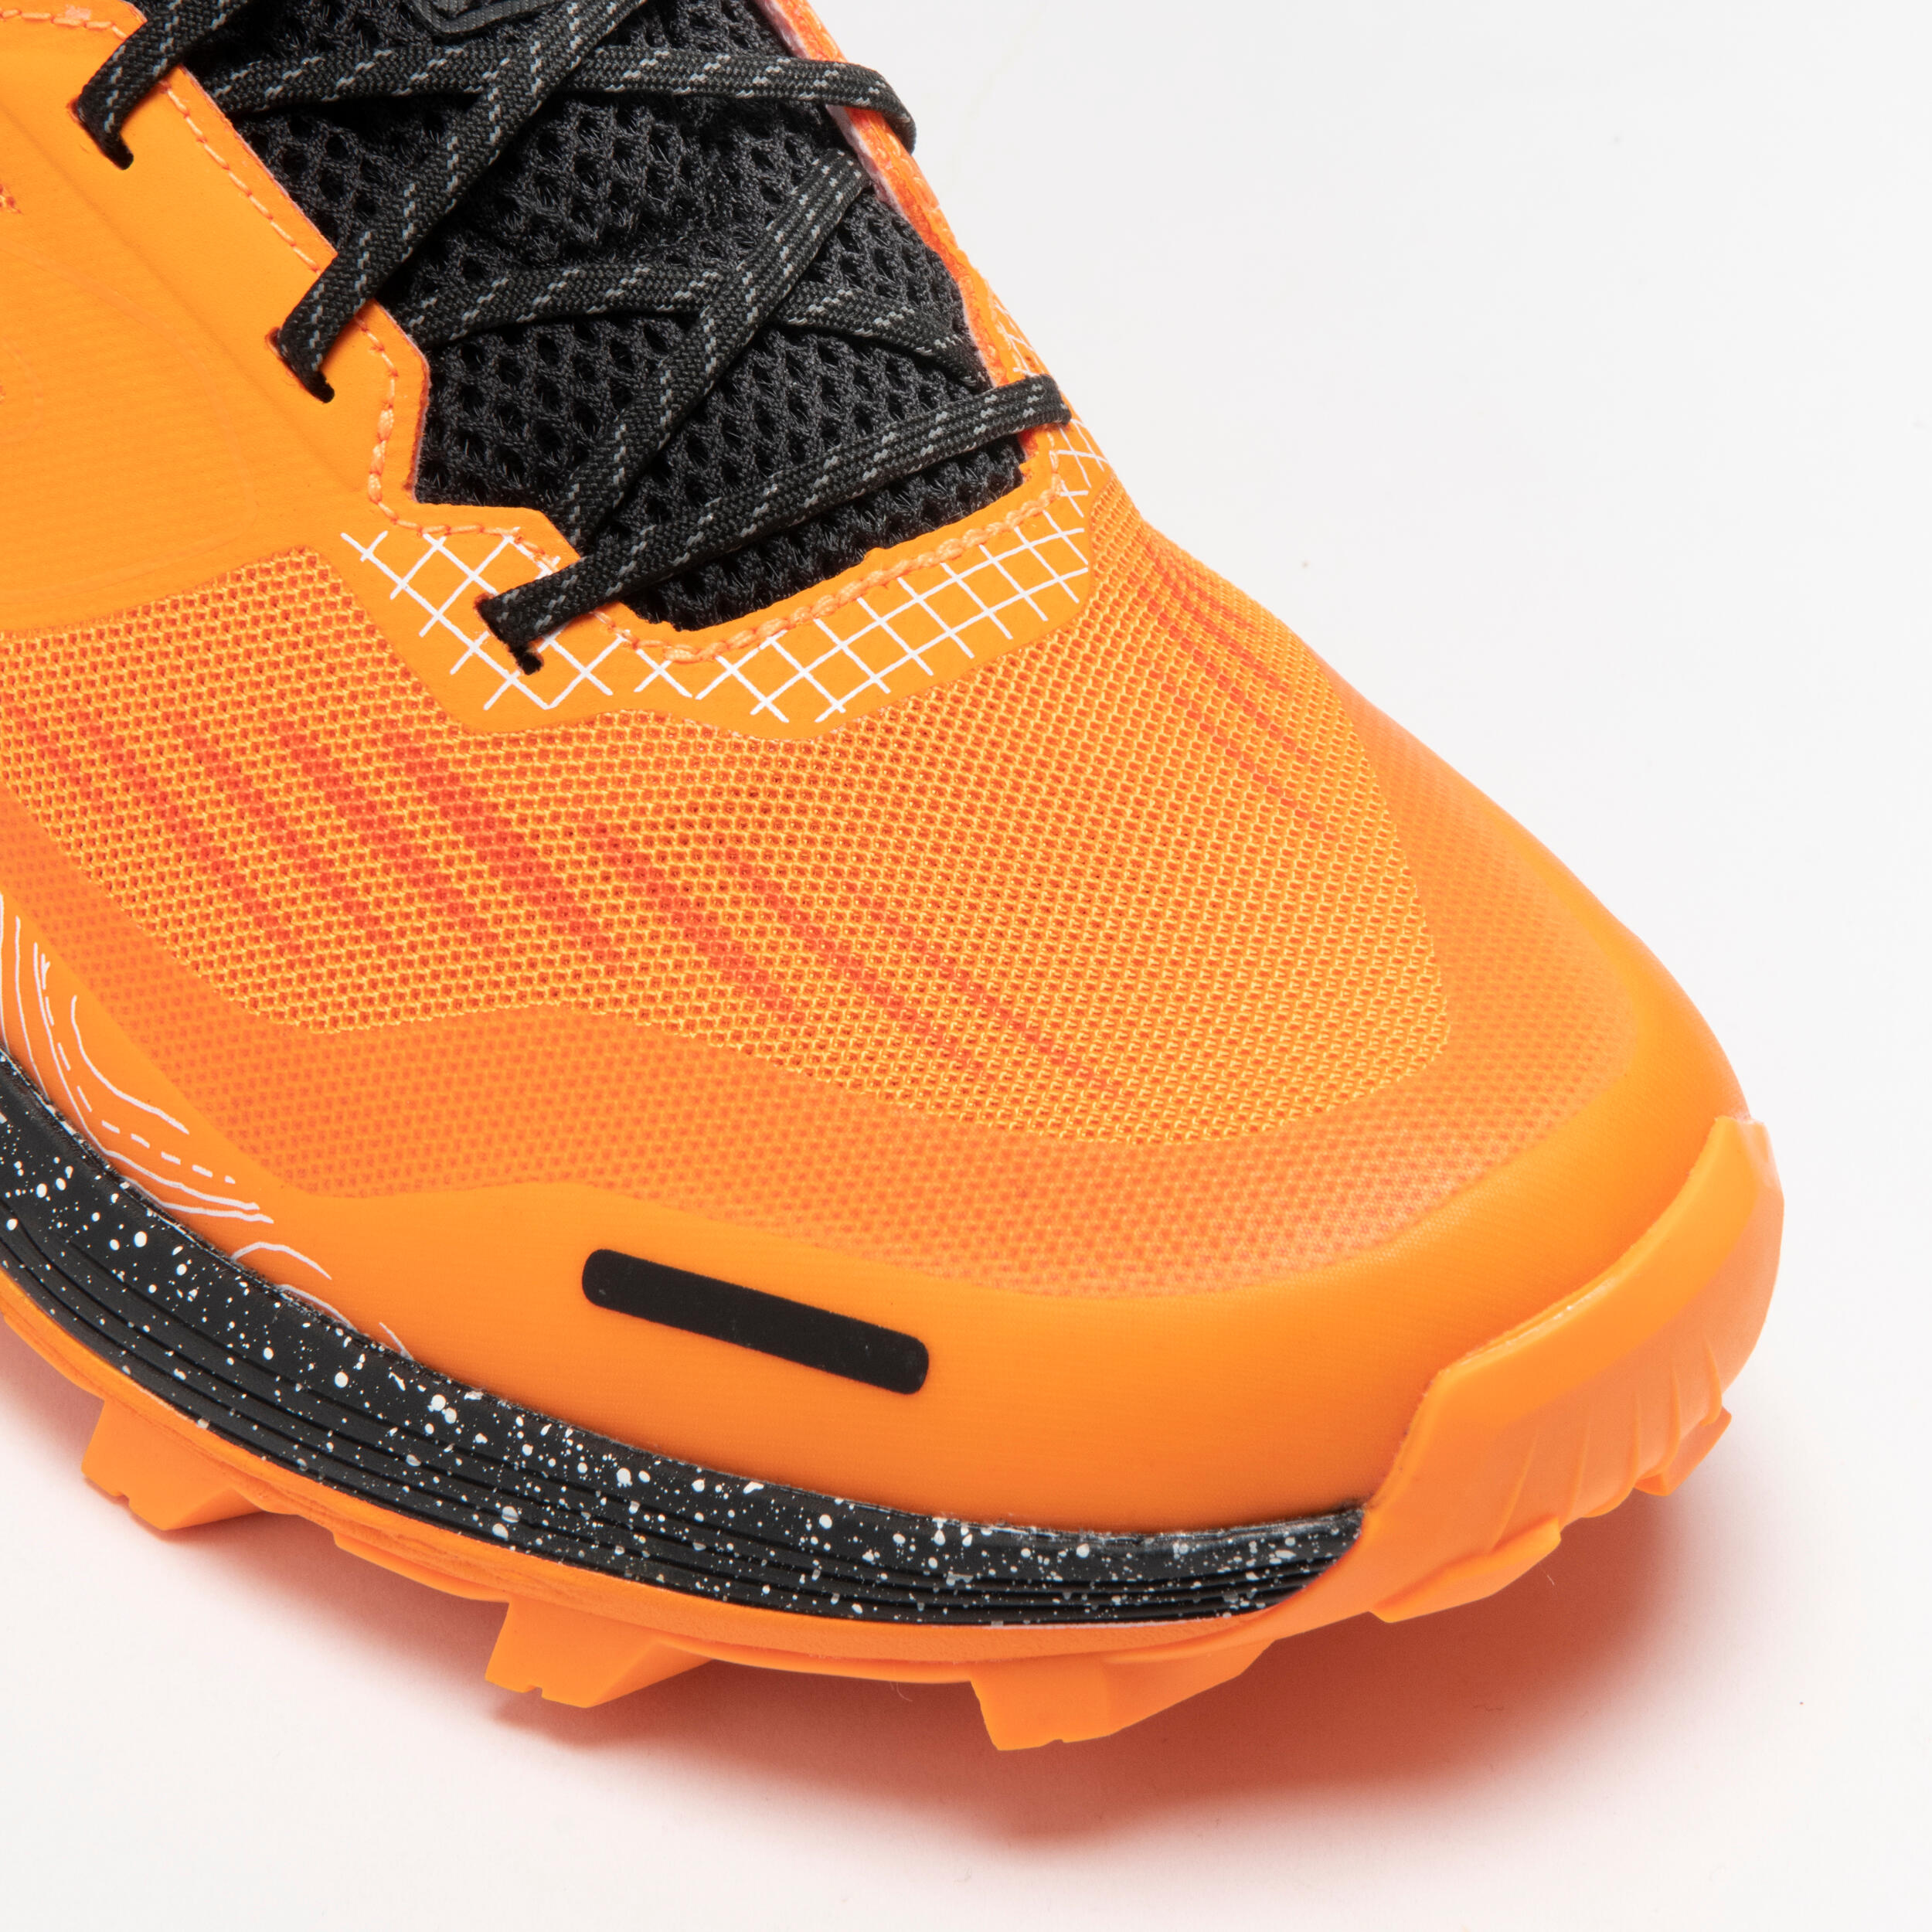 Race ULTRA Men's Trail Running Shoes - Orange/Black 11/12